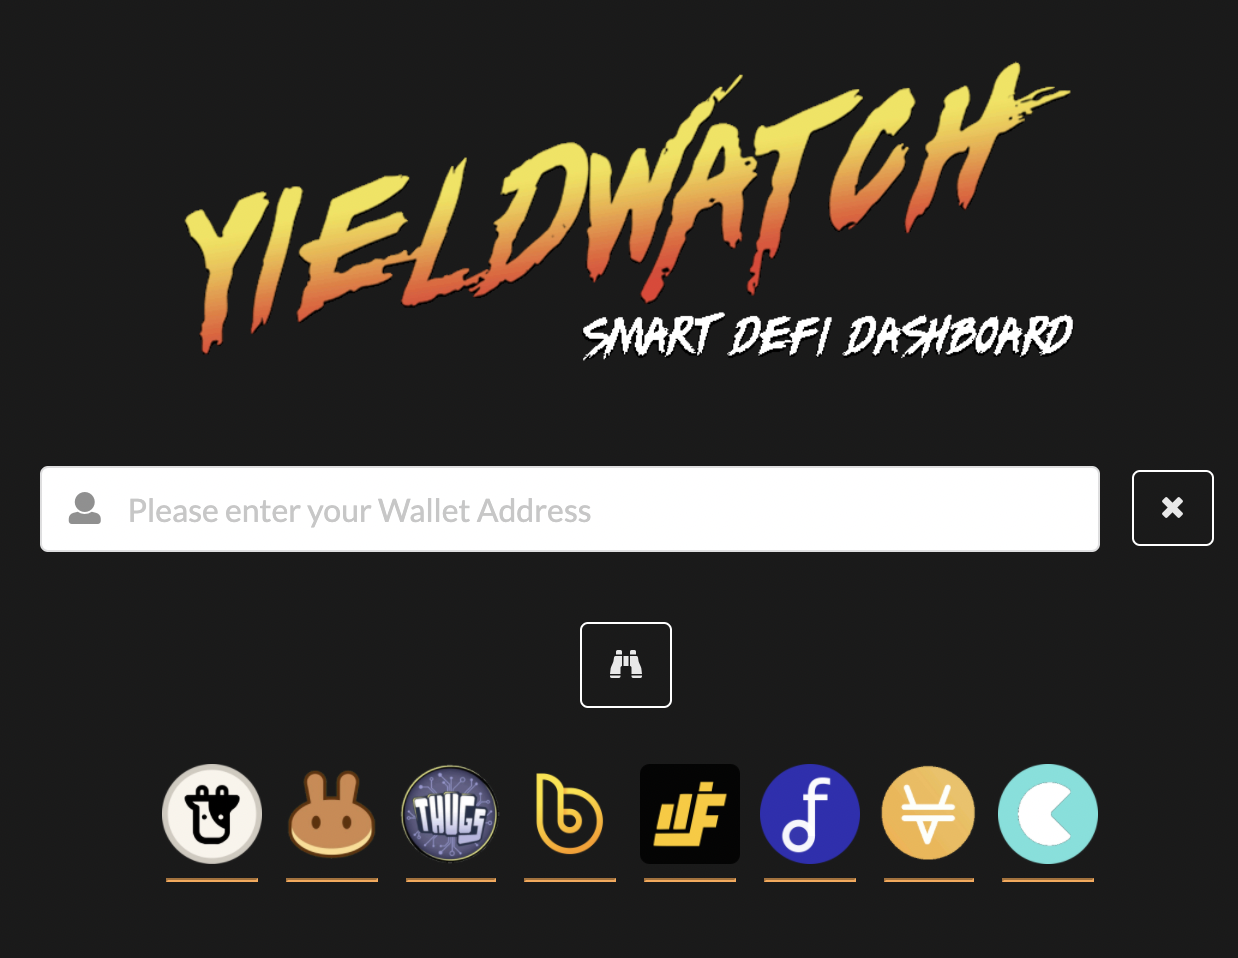 eyecatch image of yieldwatch